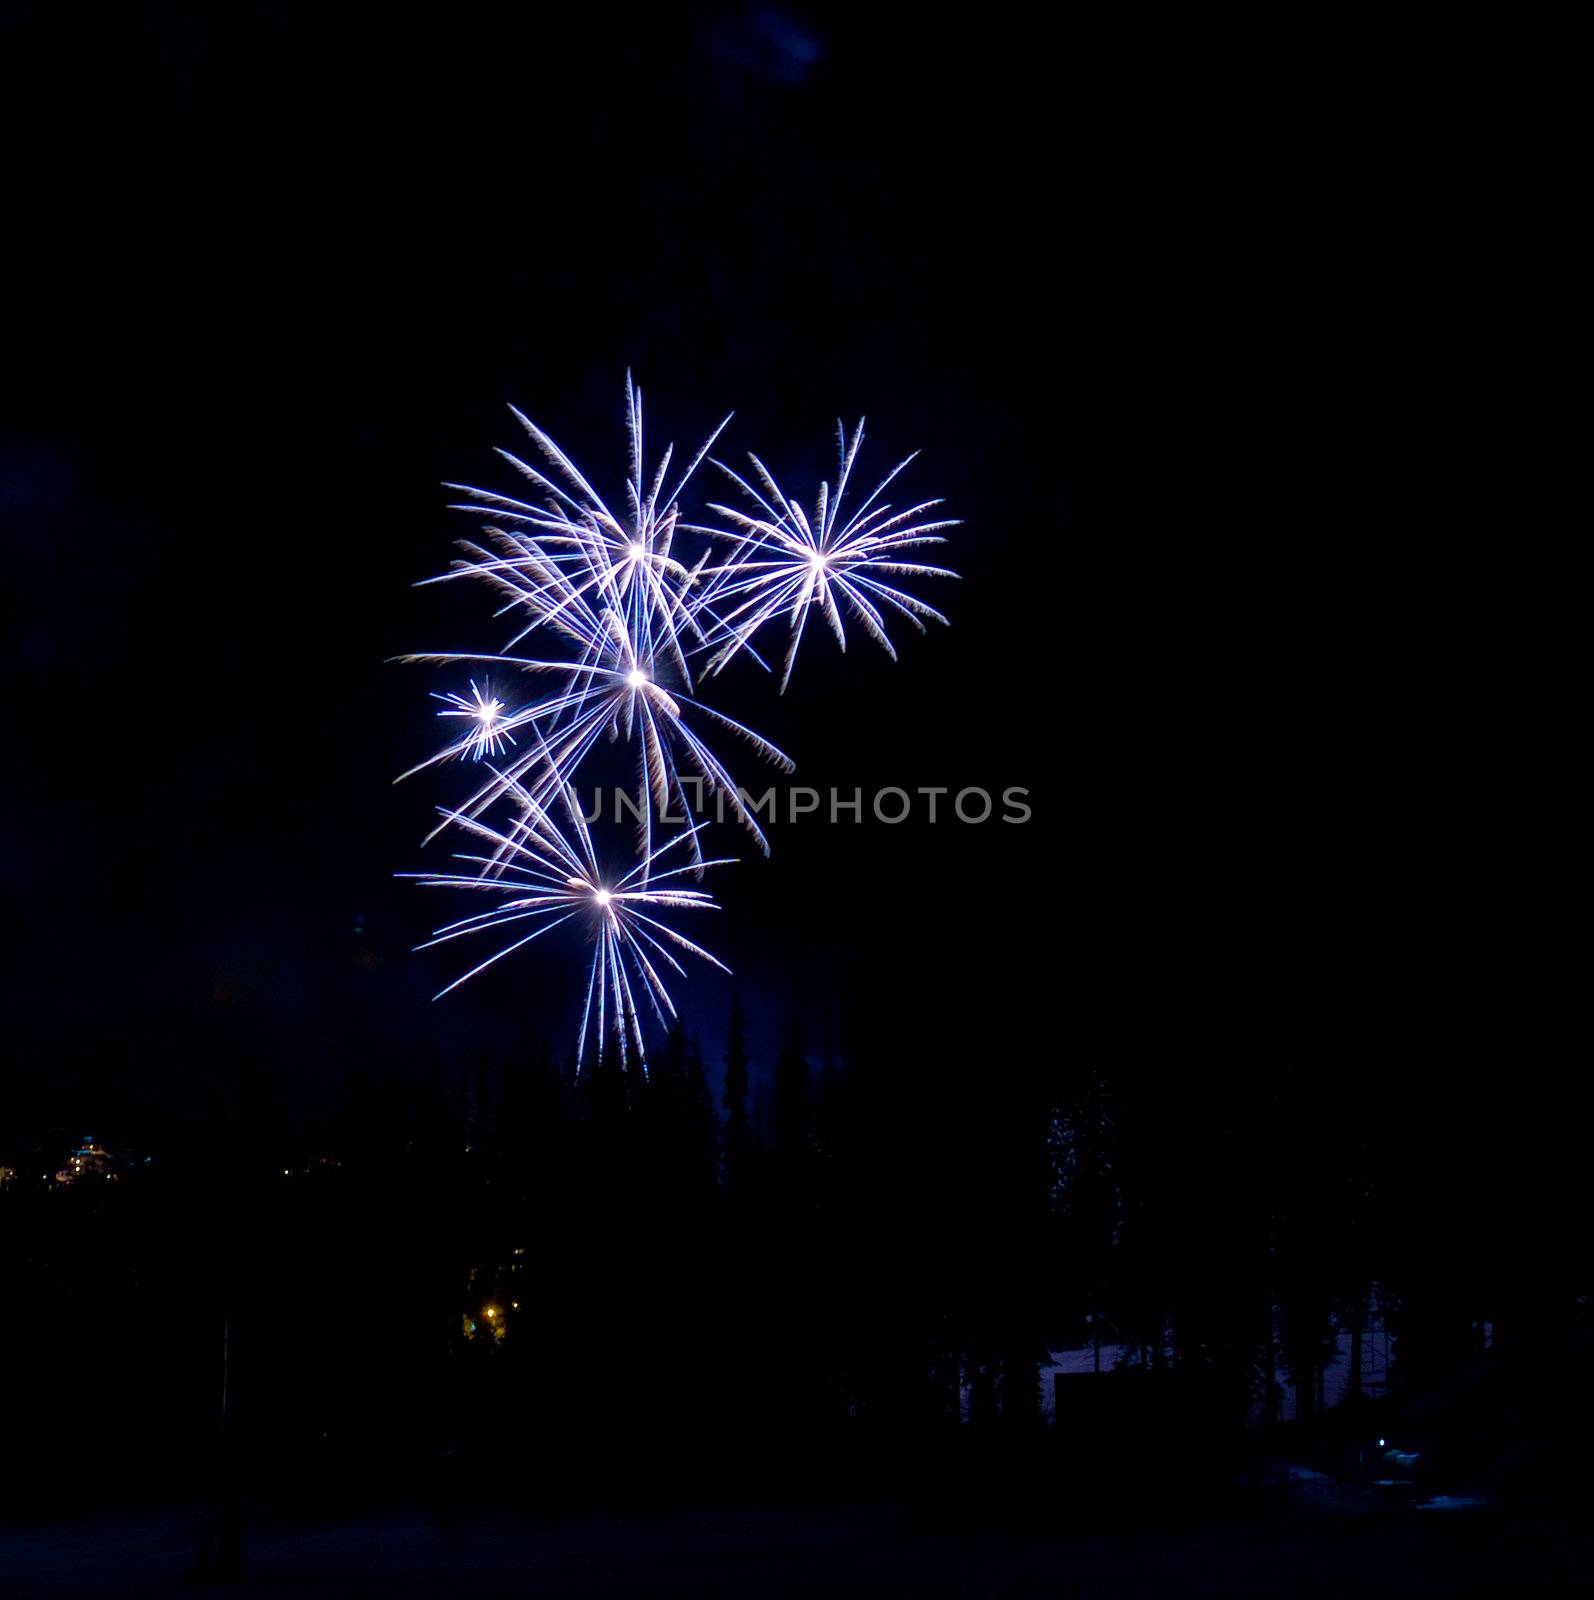 Fireworks at a ski resort in British Columbia by edan